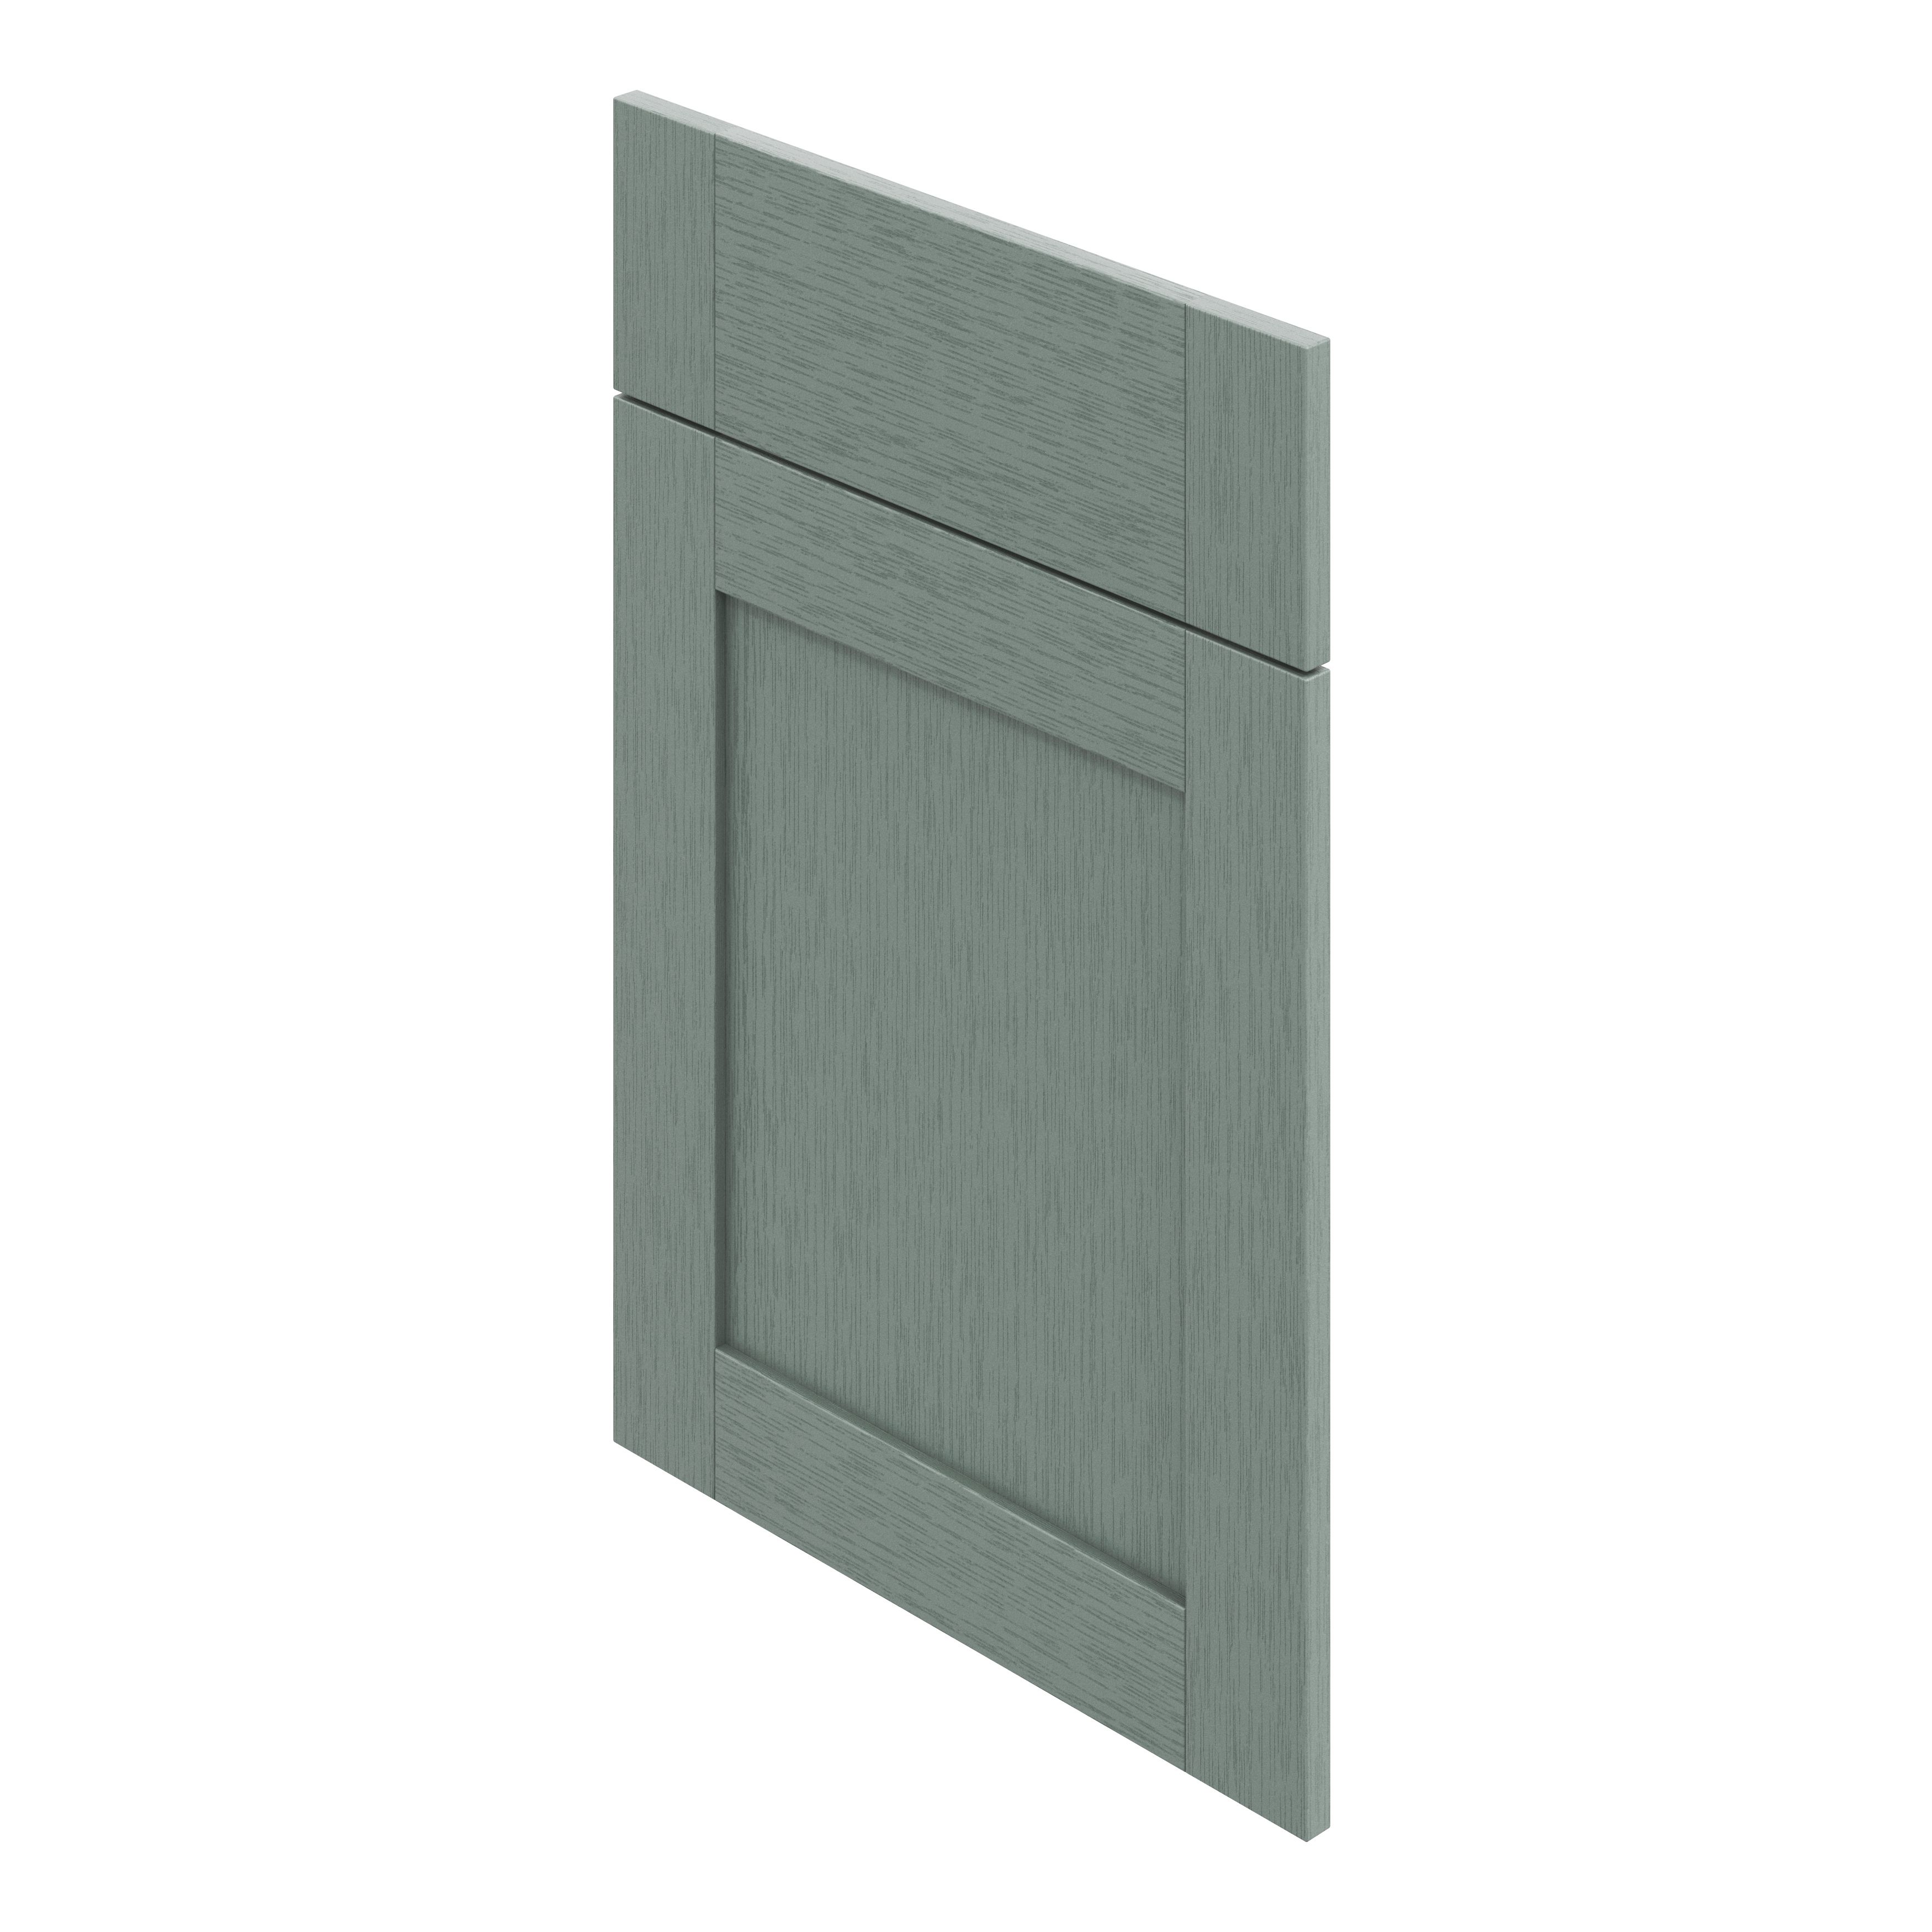 GoodHome Alpinia Matt Green Painted Wood Effect Shaker Drawerline door & drawer front, (W)500mm (H)715mm (T)18mm